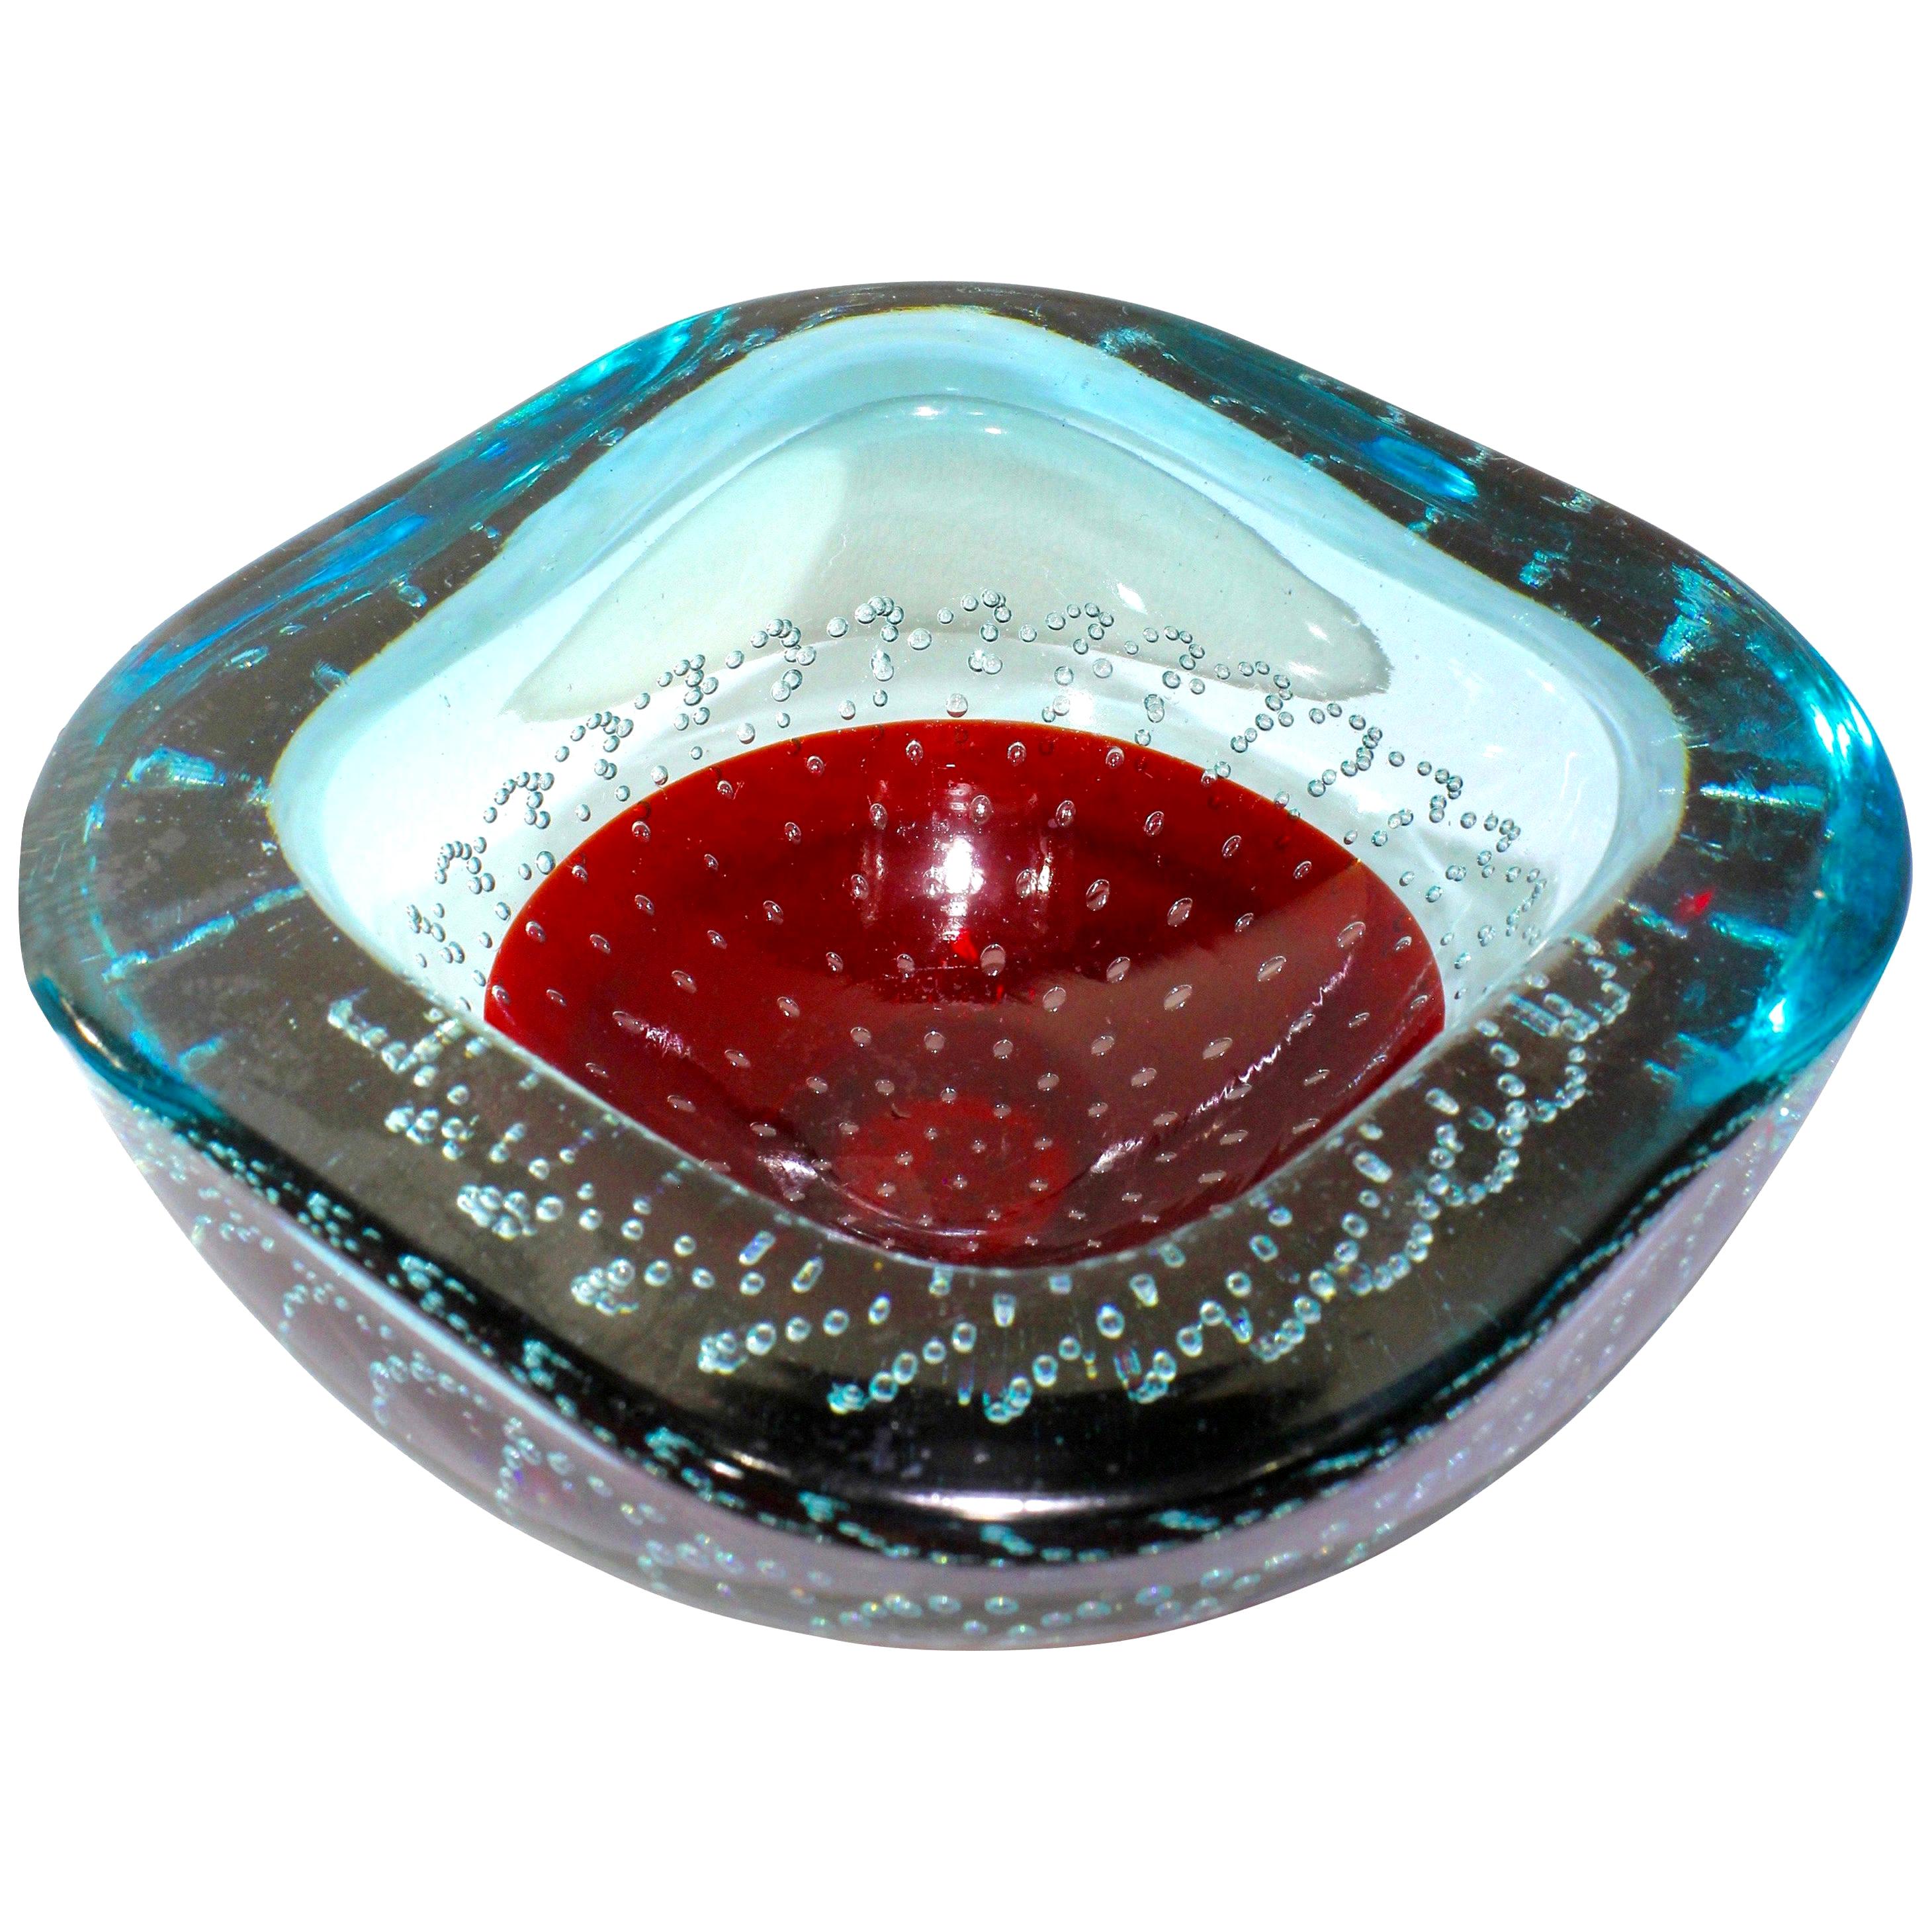  Galliano Ferro Red and Blue Controlled Bubbles Murano Glass Bowl